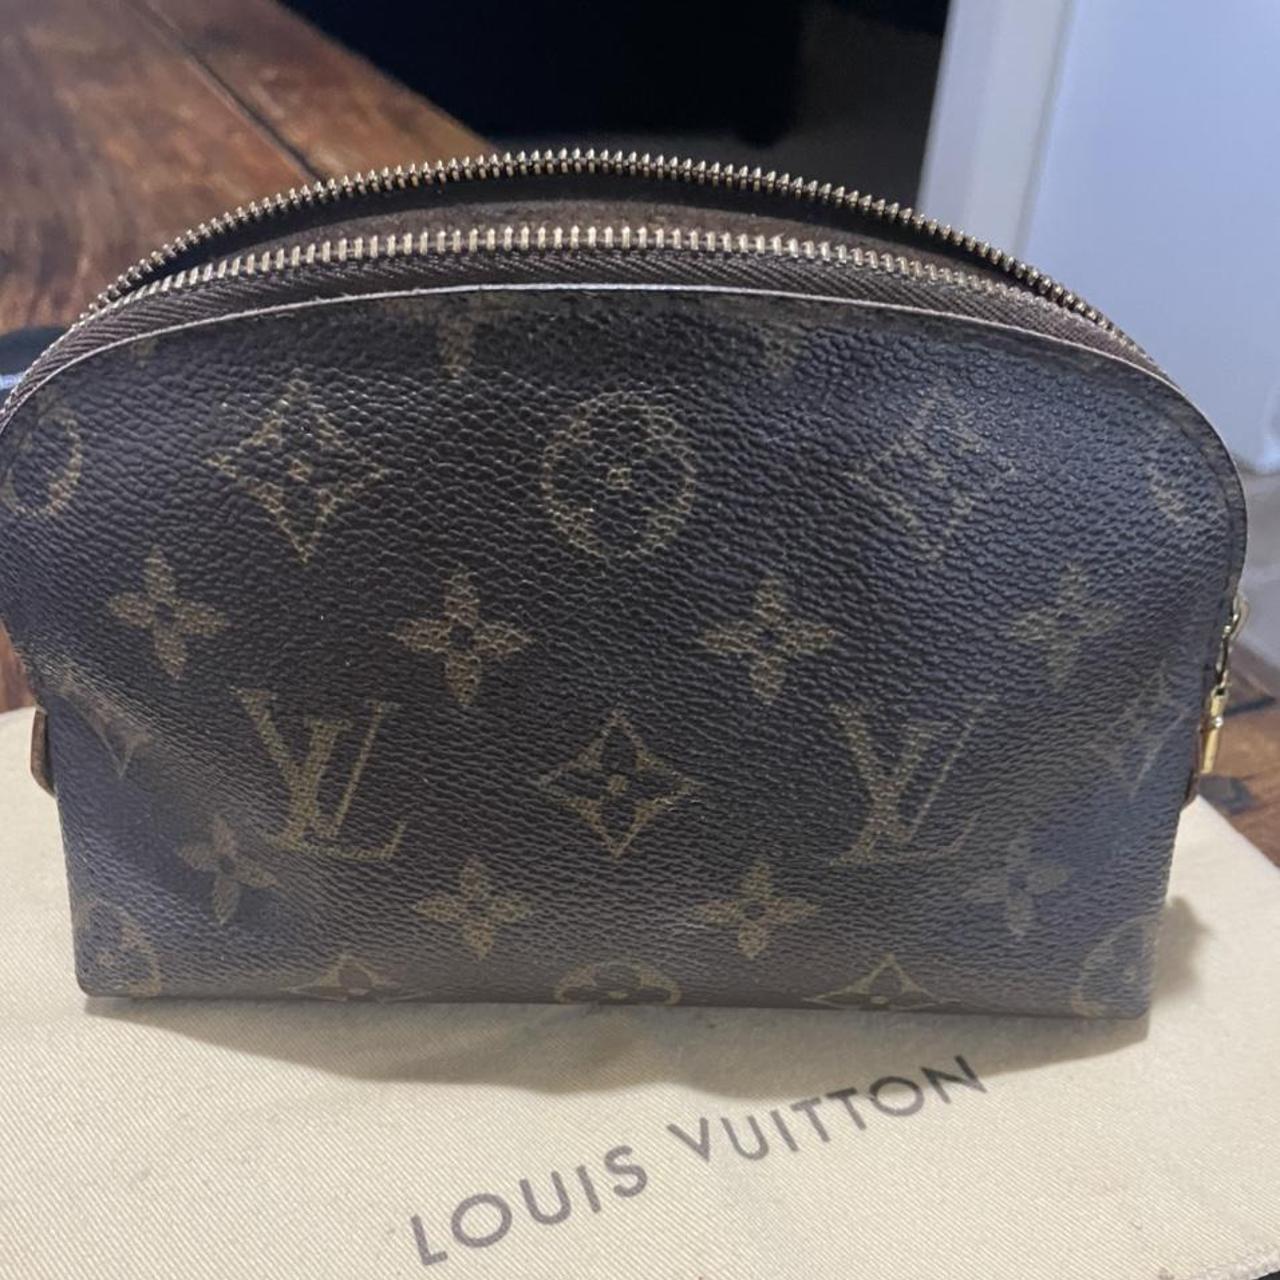 Authentic Louis Vuitton, vintage bag in like new - Depop